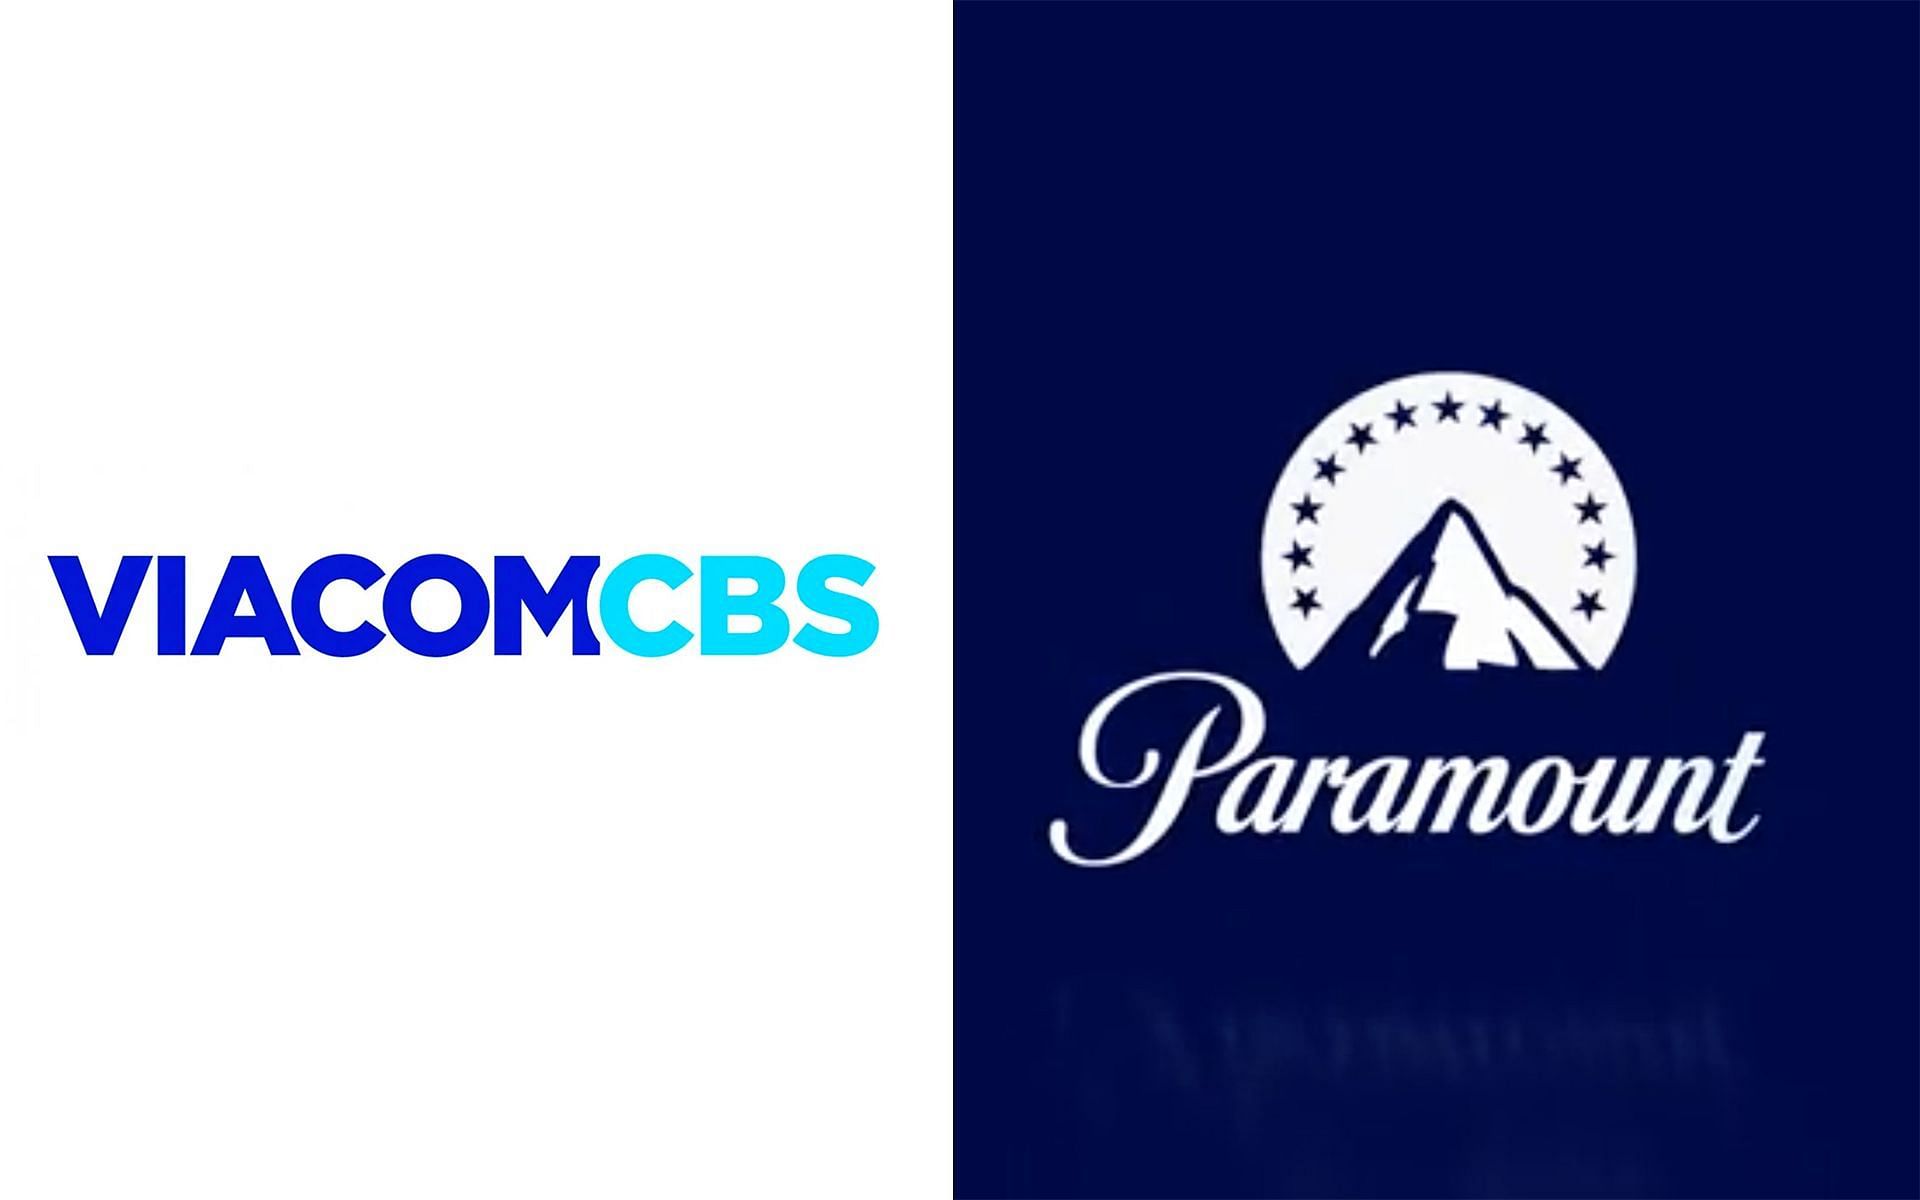 To promote its streaming future, ViacomCBS has changed its name to Paramount (Image via Sportskeeda)